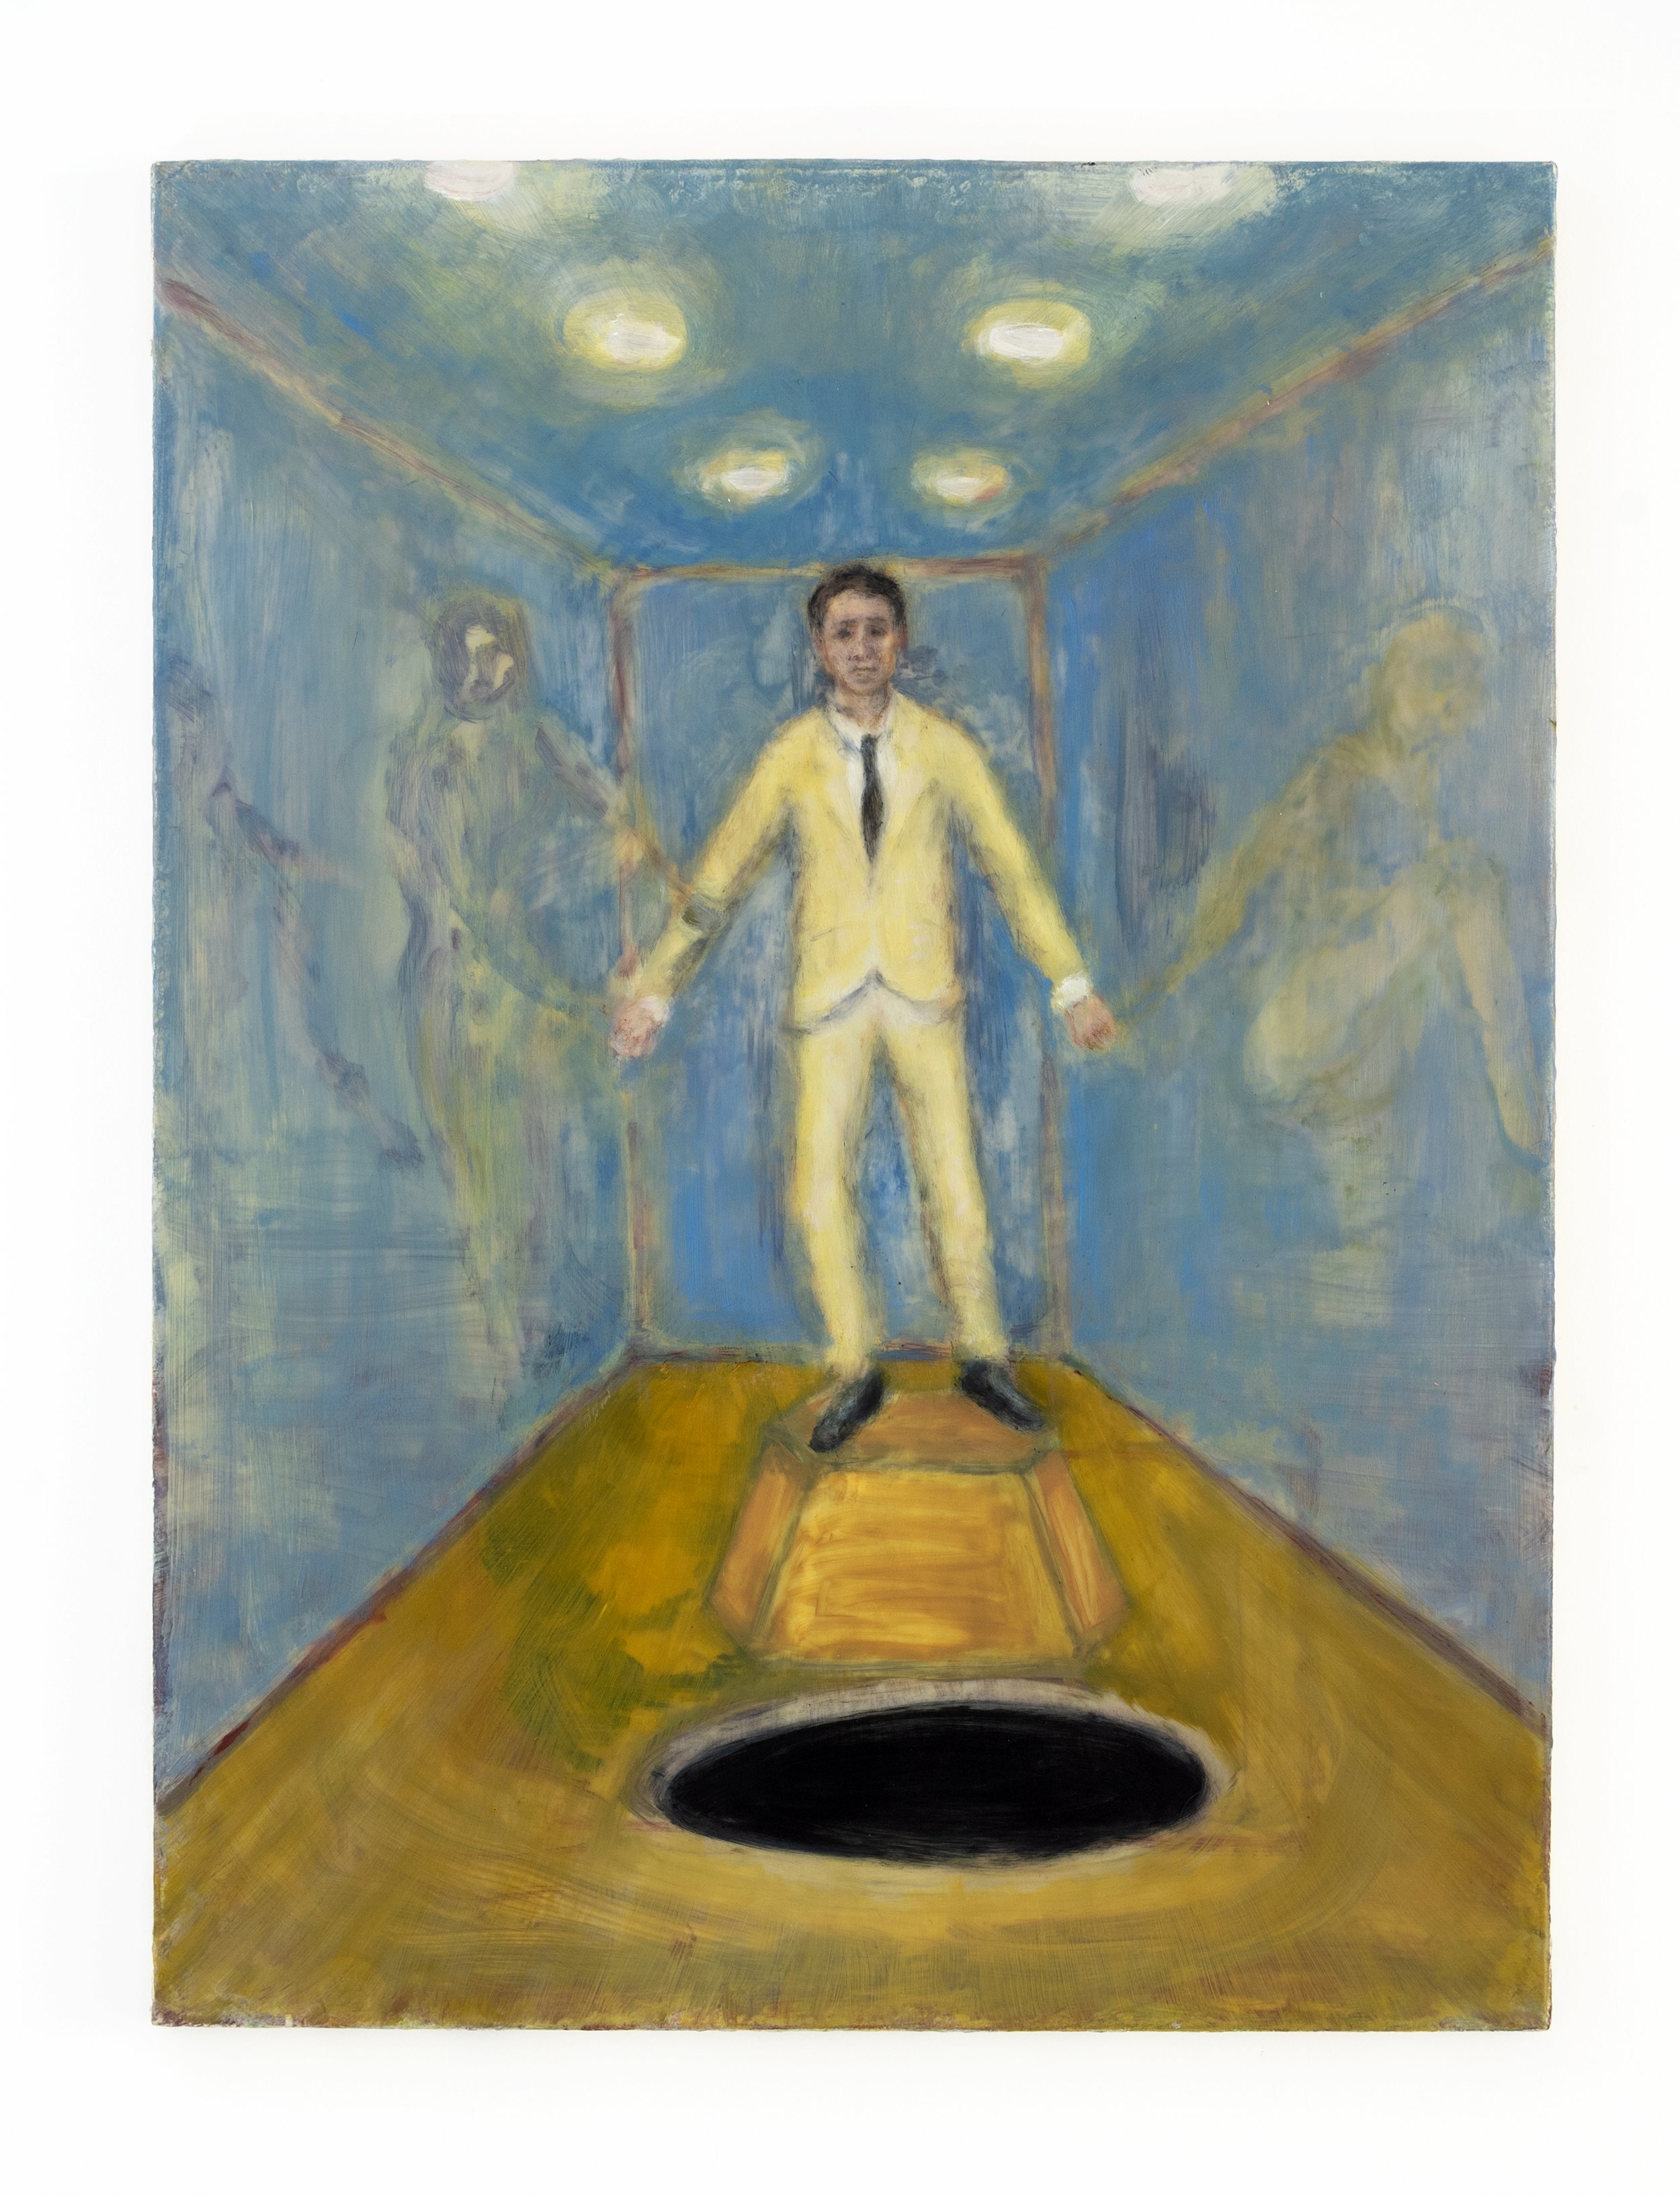   A Boy’s Temptation,   2020, oil and resin on canvas, 80 x 60 cm  